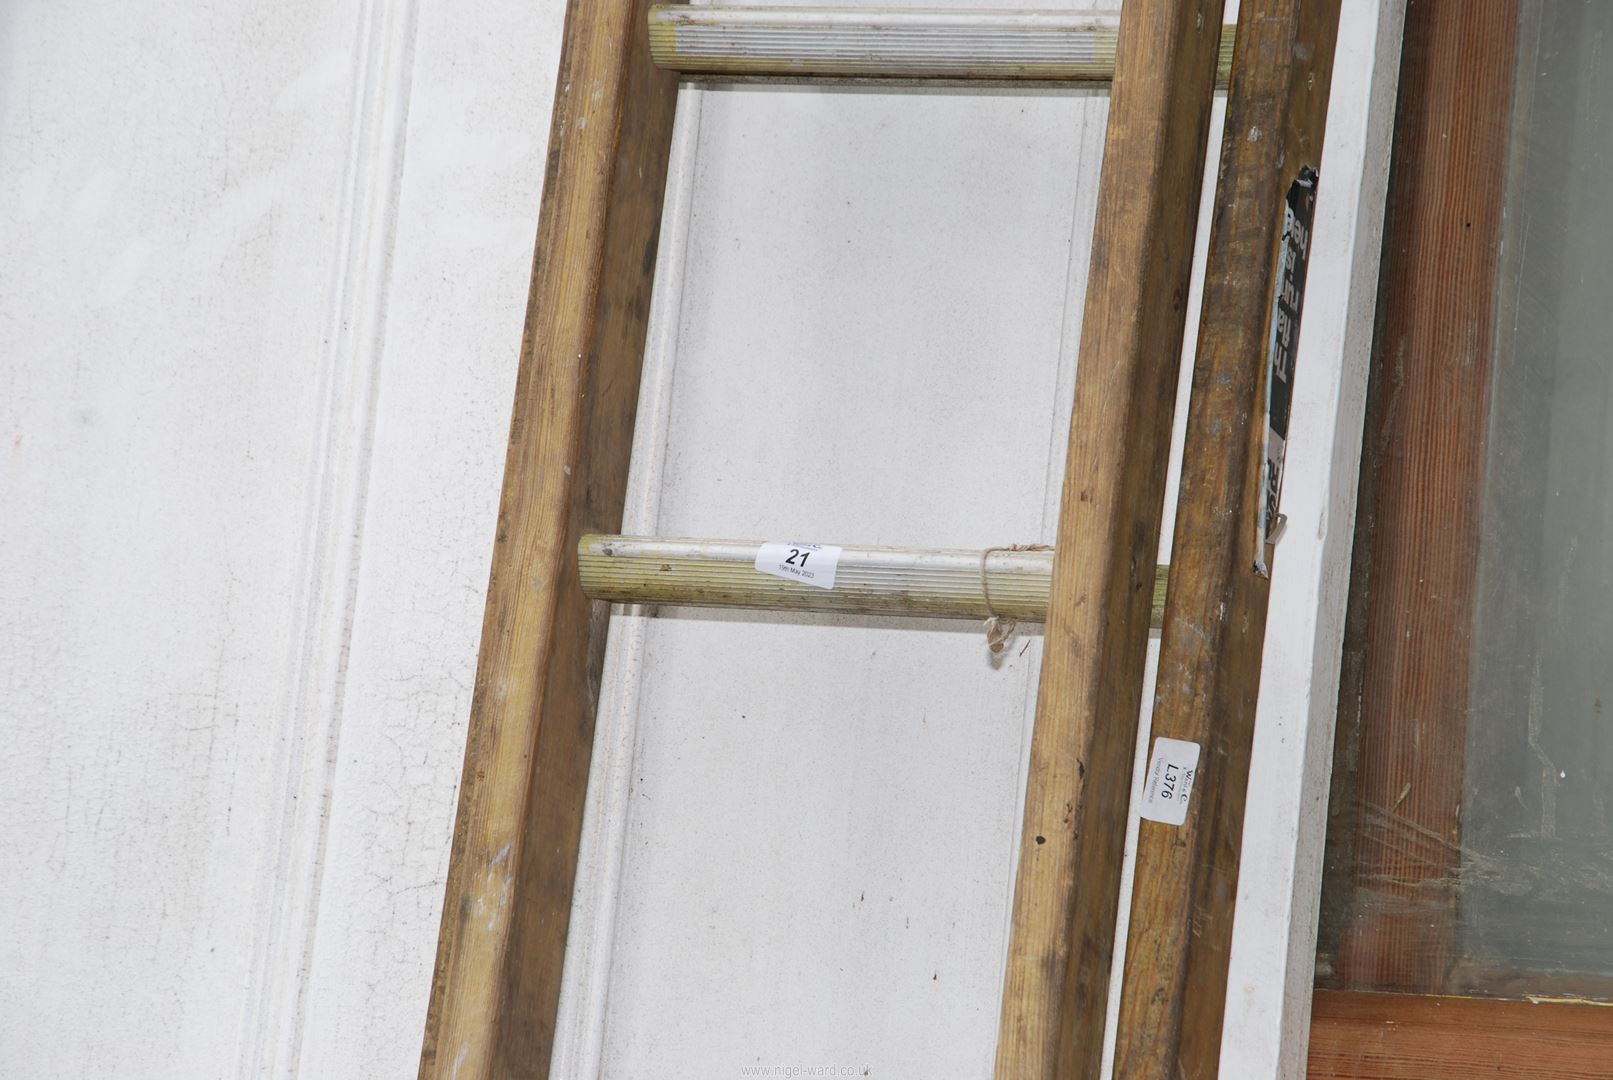 An eleven rung Aluminium and wood extending ladder. - Image 2 of 2